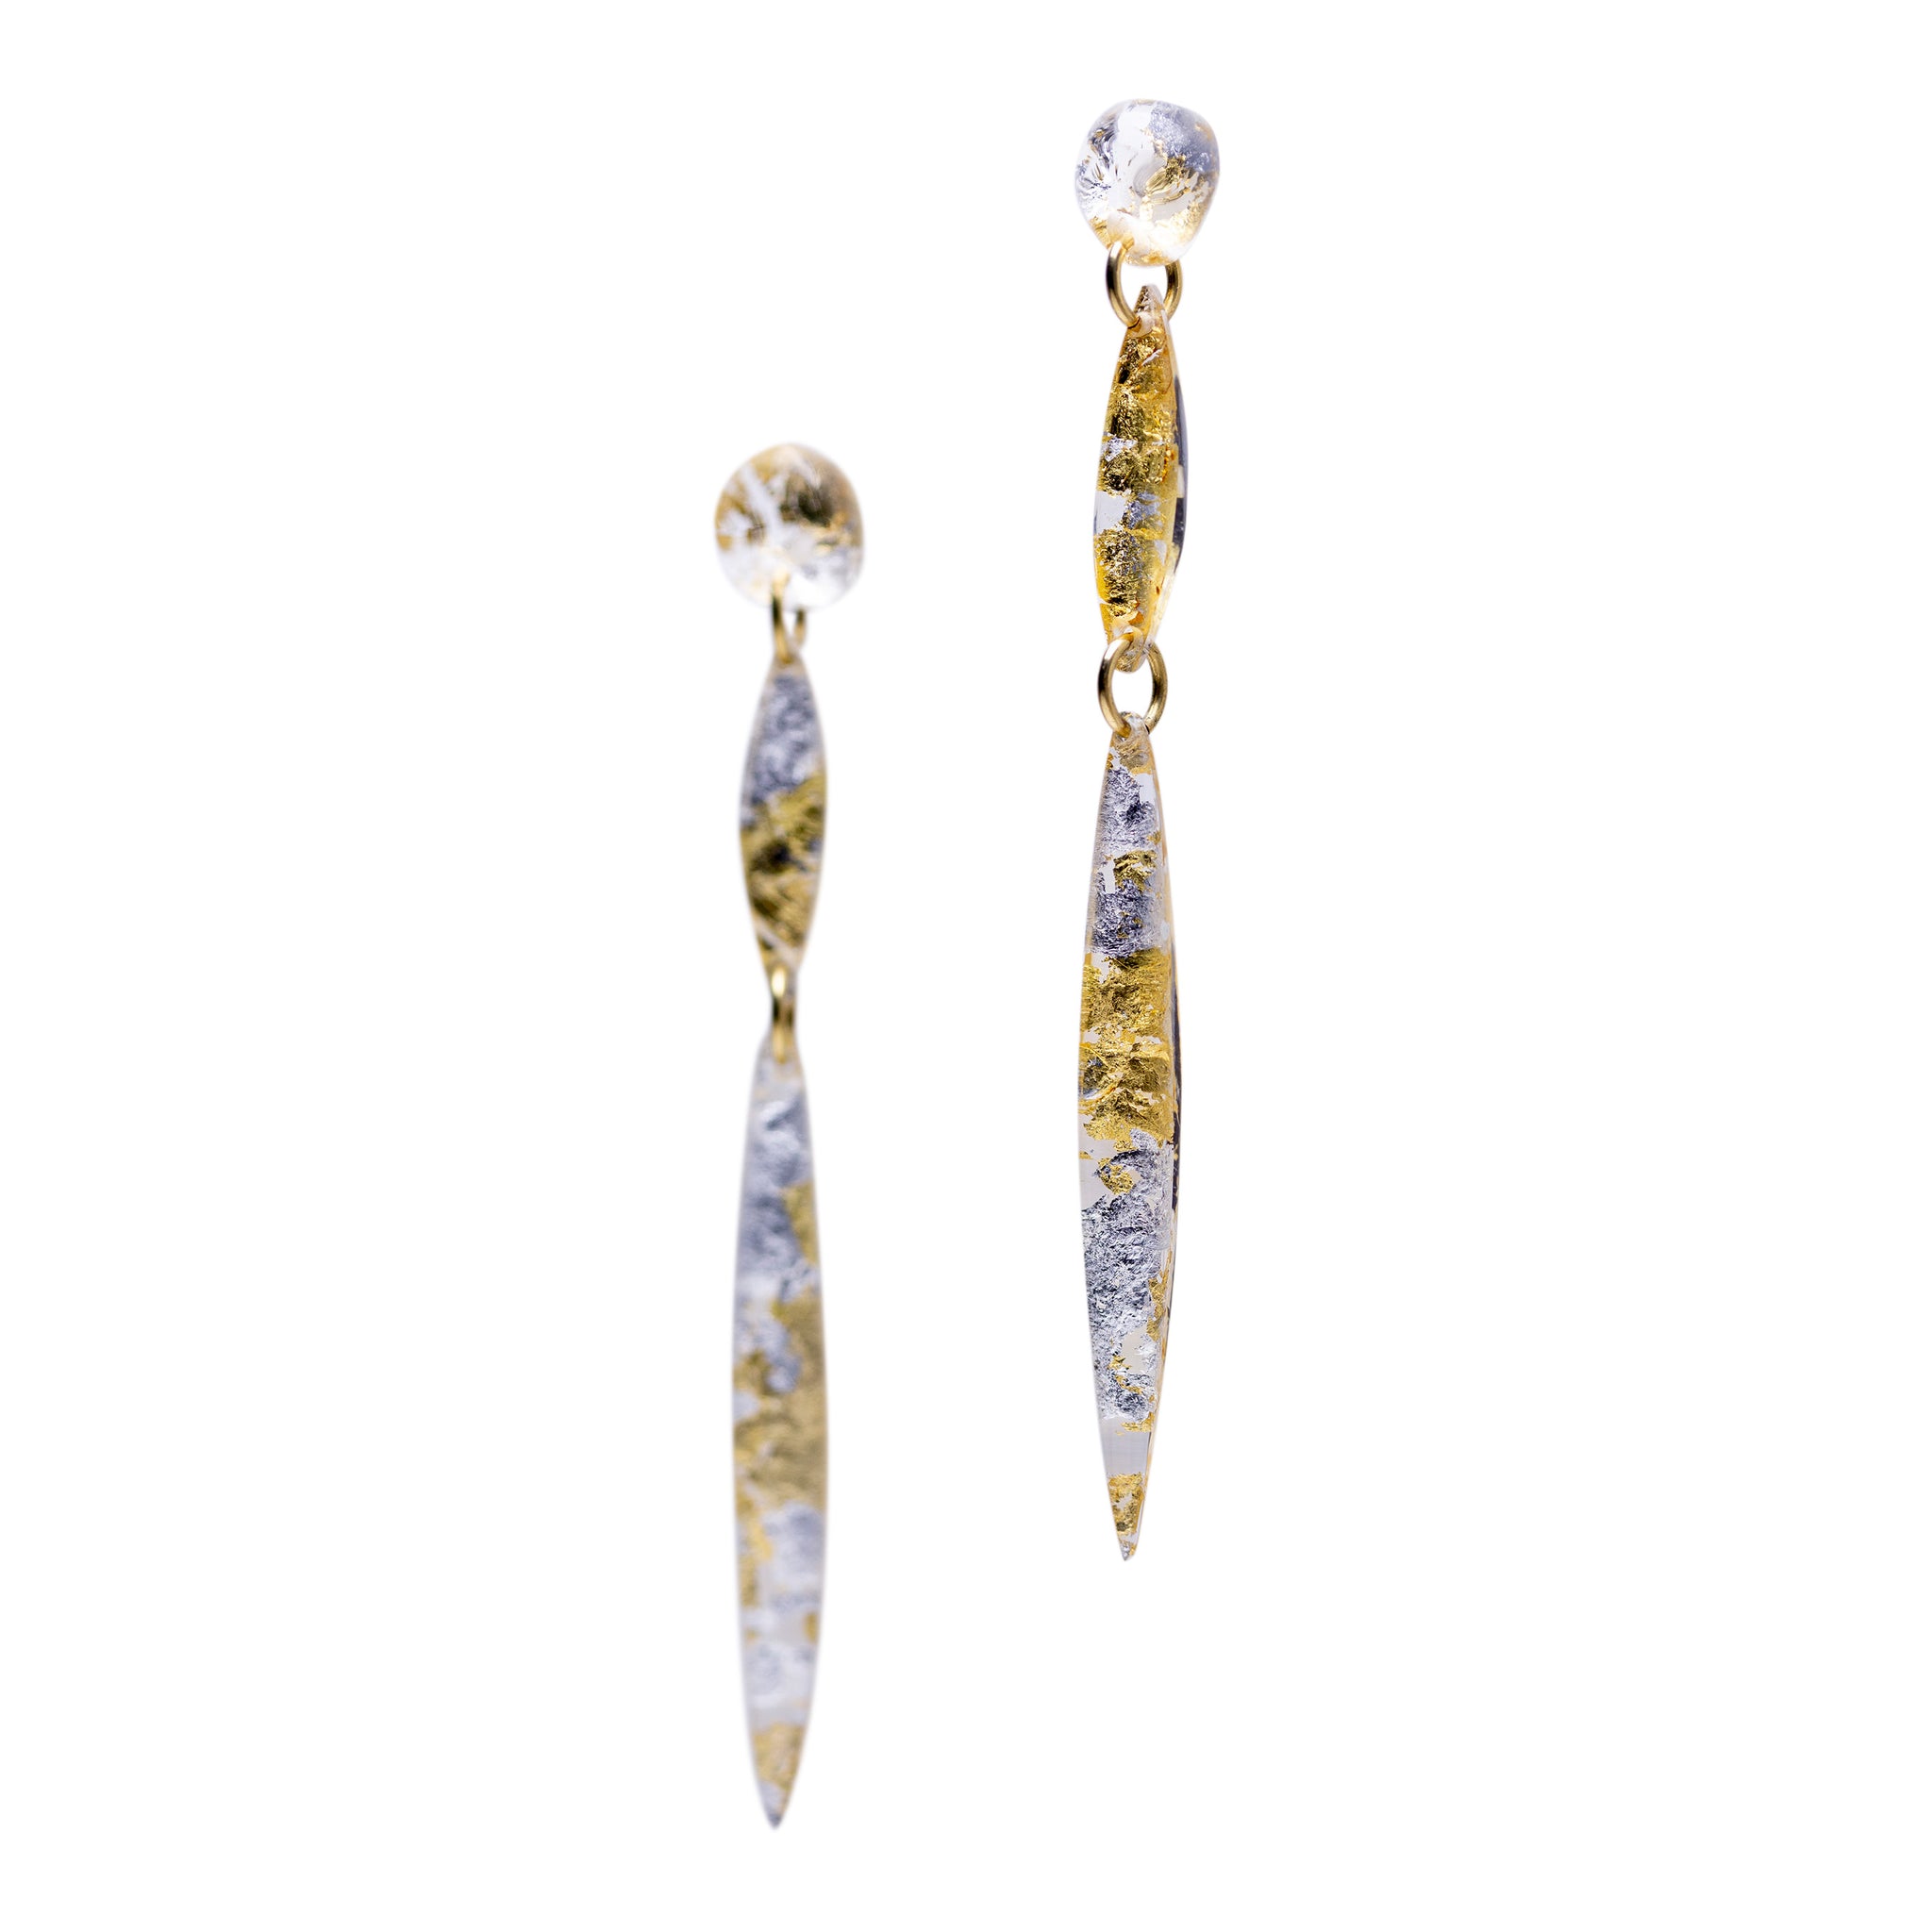 Reem's Dangling Earrings - Silver and Gold/ les boucles de Reem